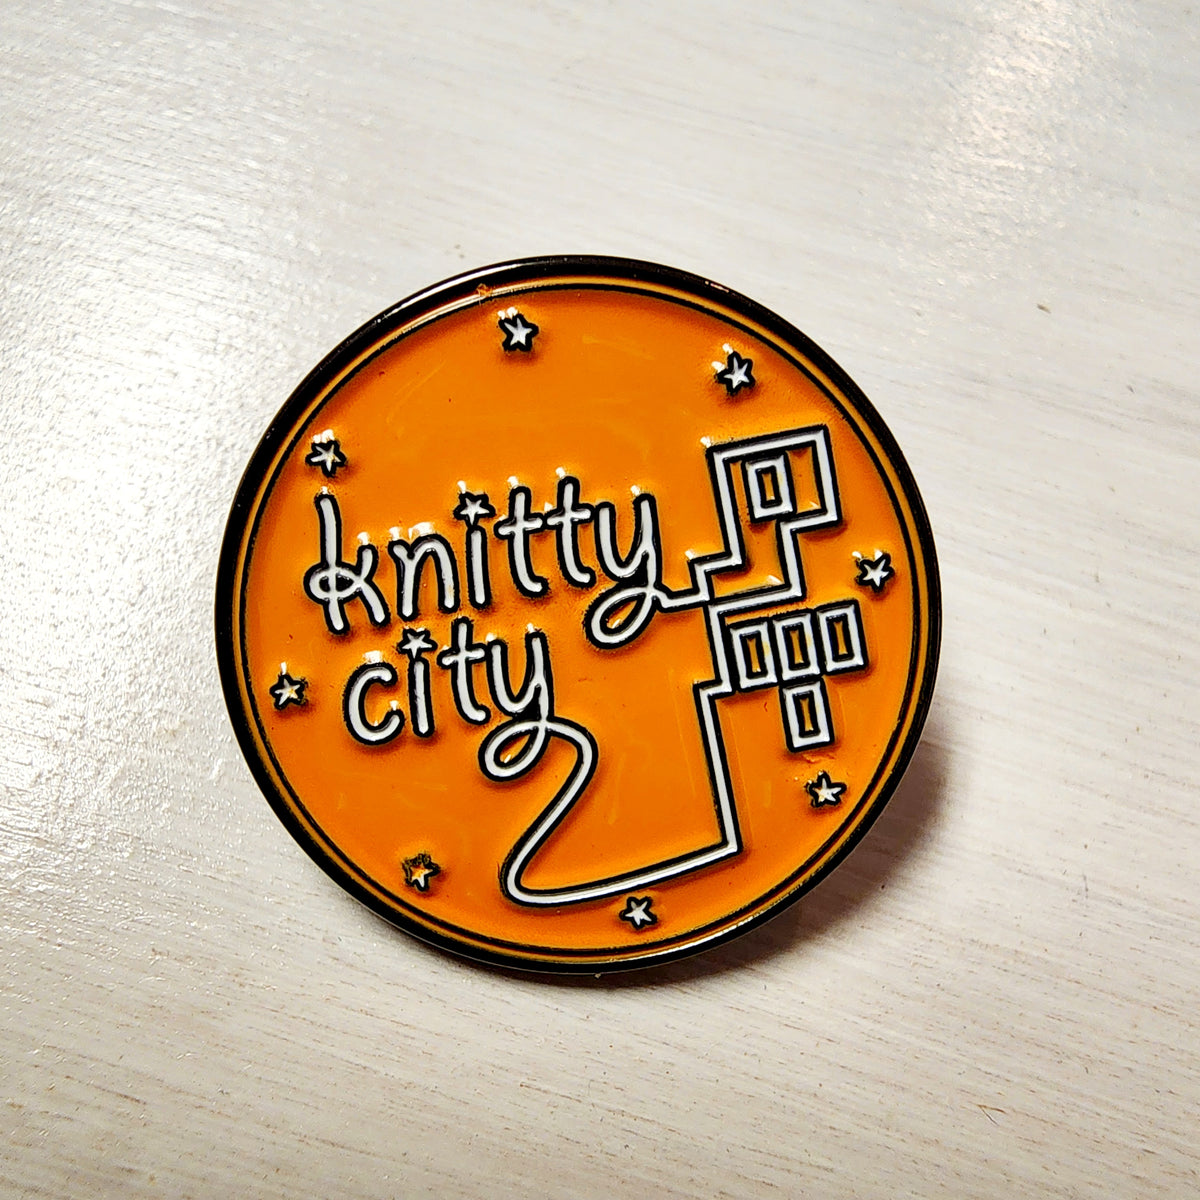 Knitty City Enamel Pin